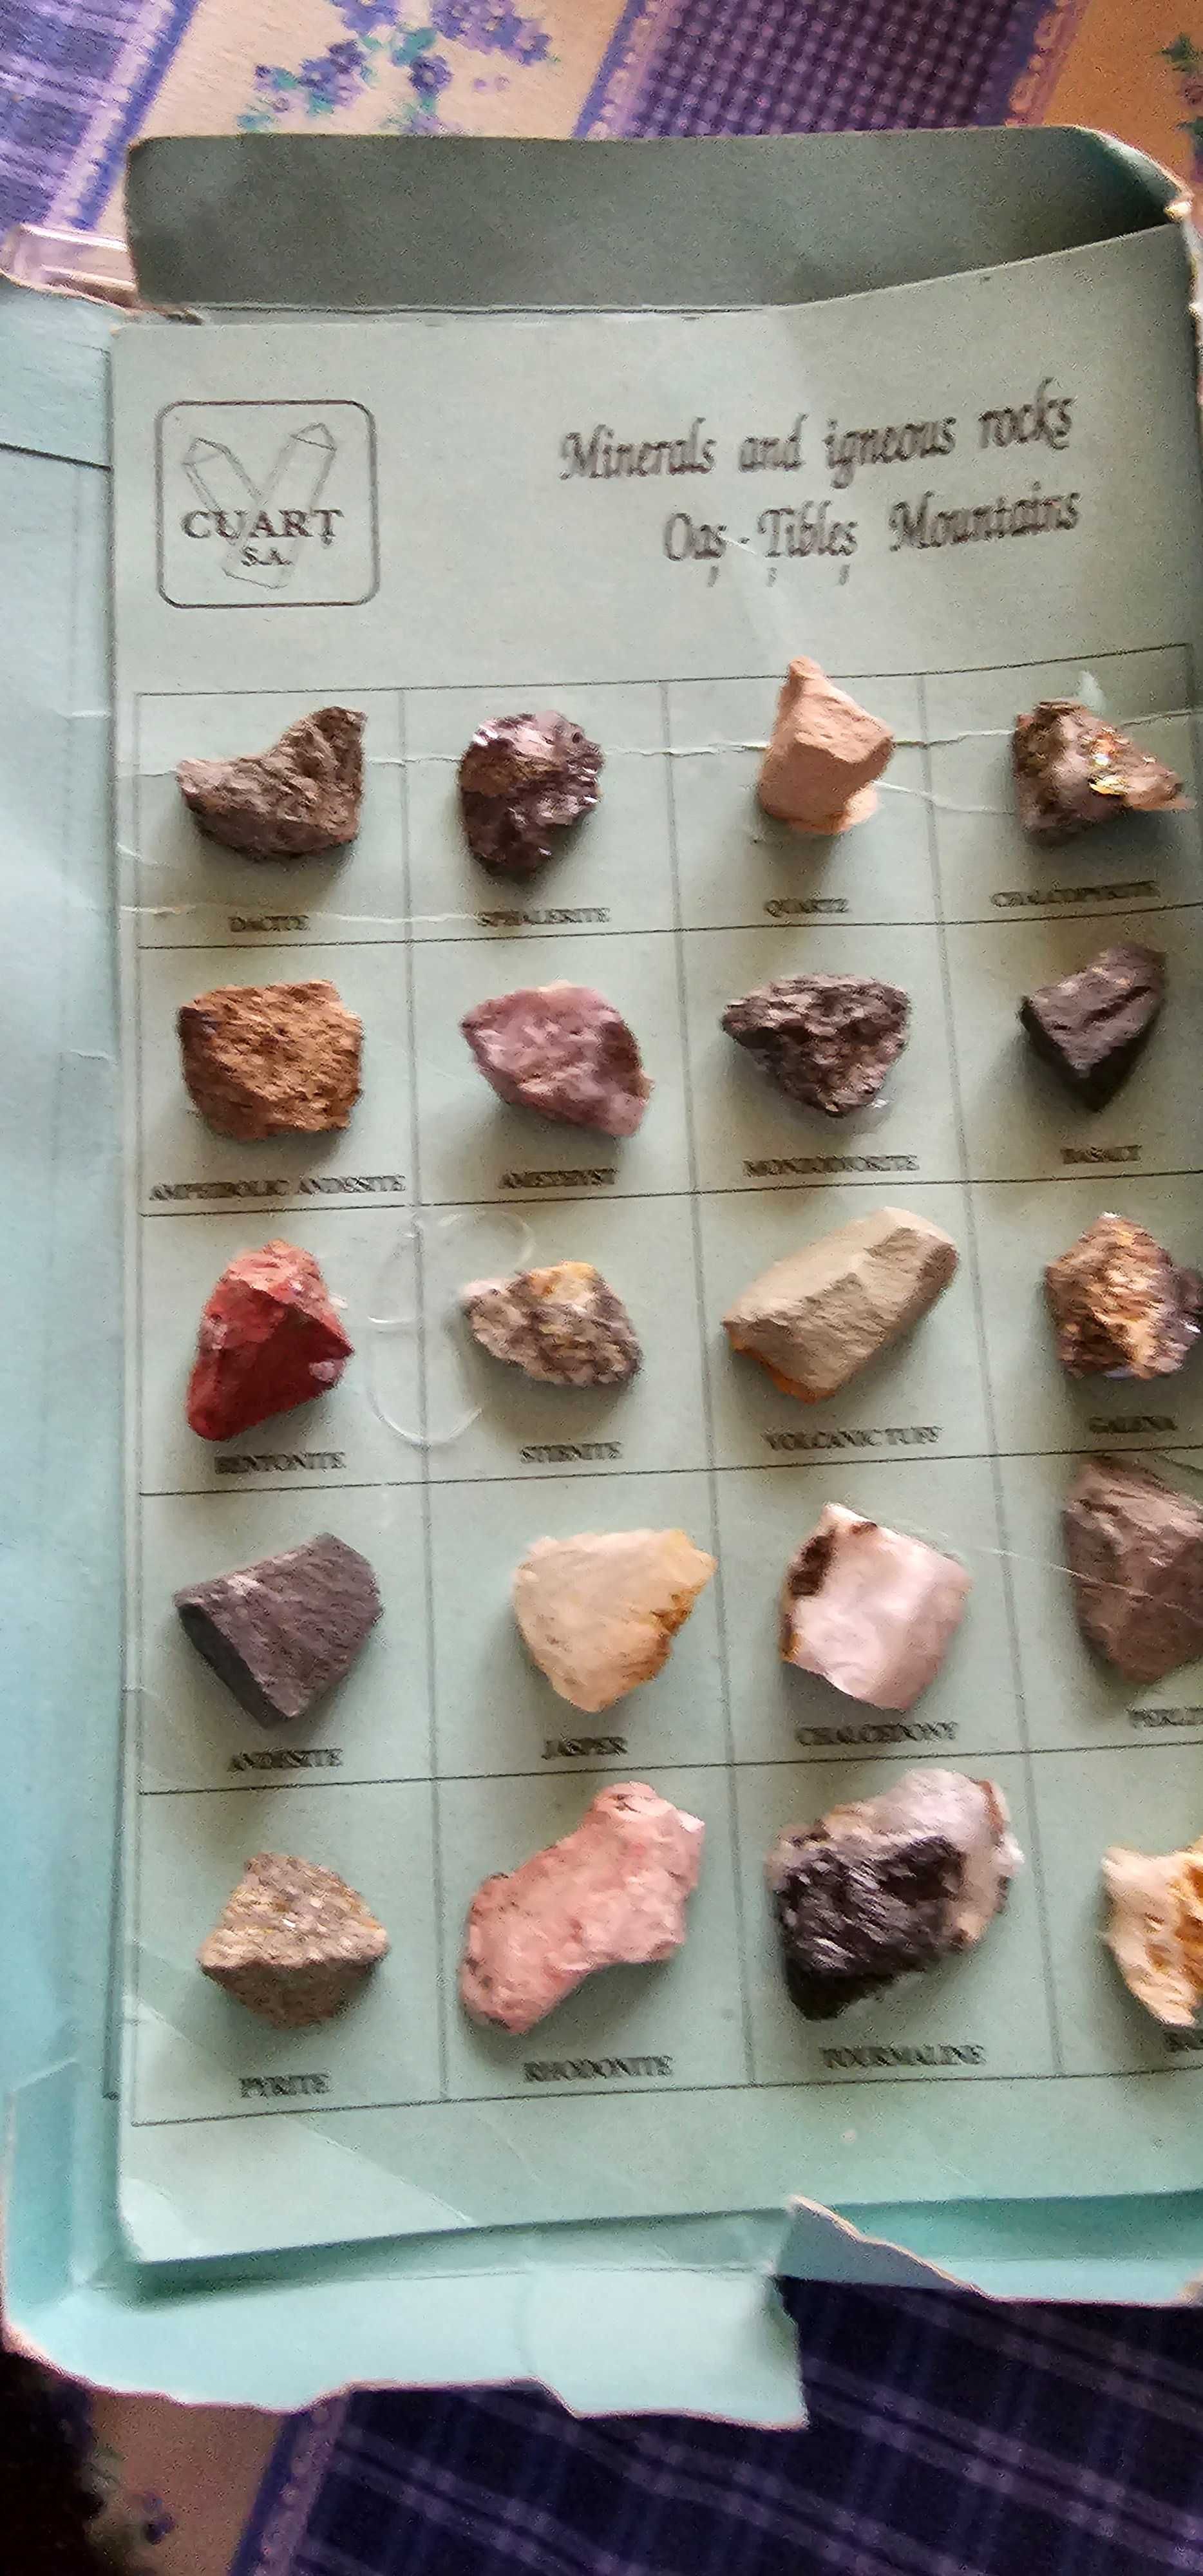 pietre si minerale colectie